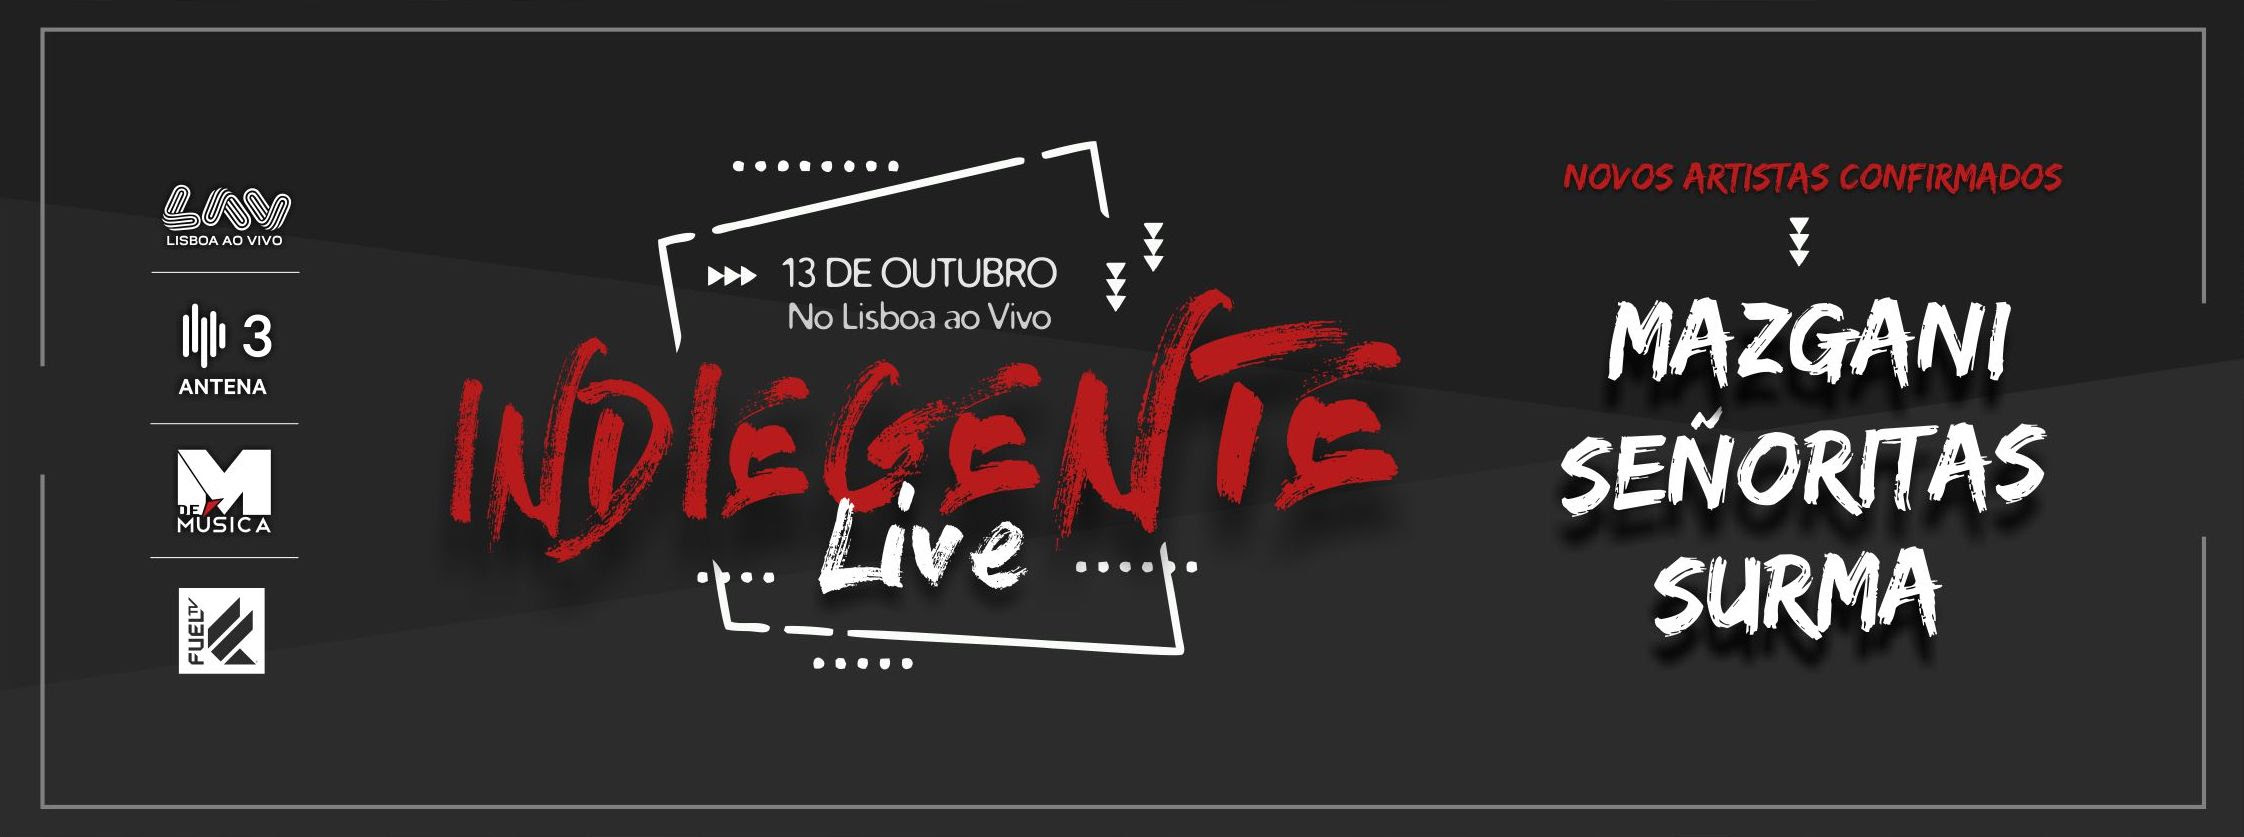 Cartaz Festival 2018 - Indiegente Live